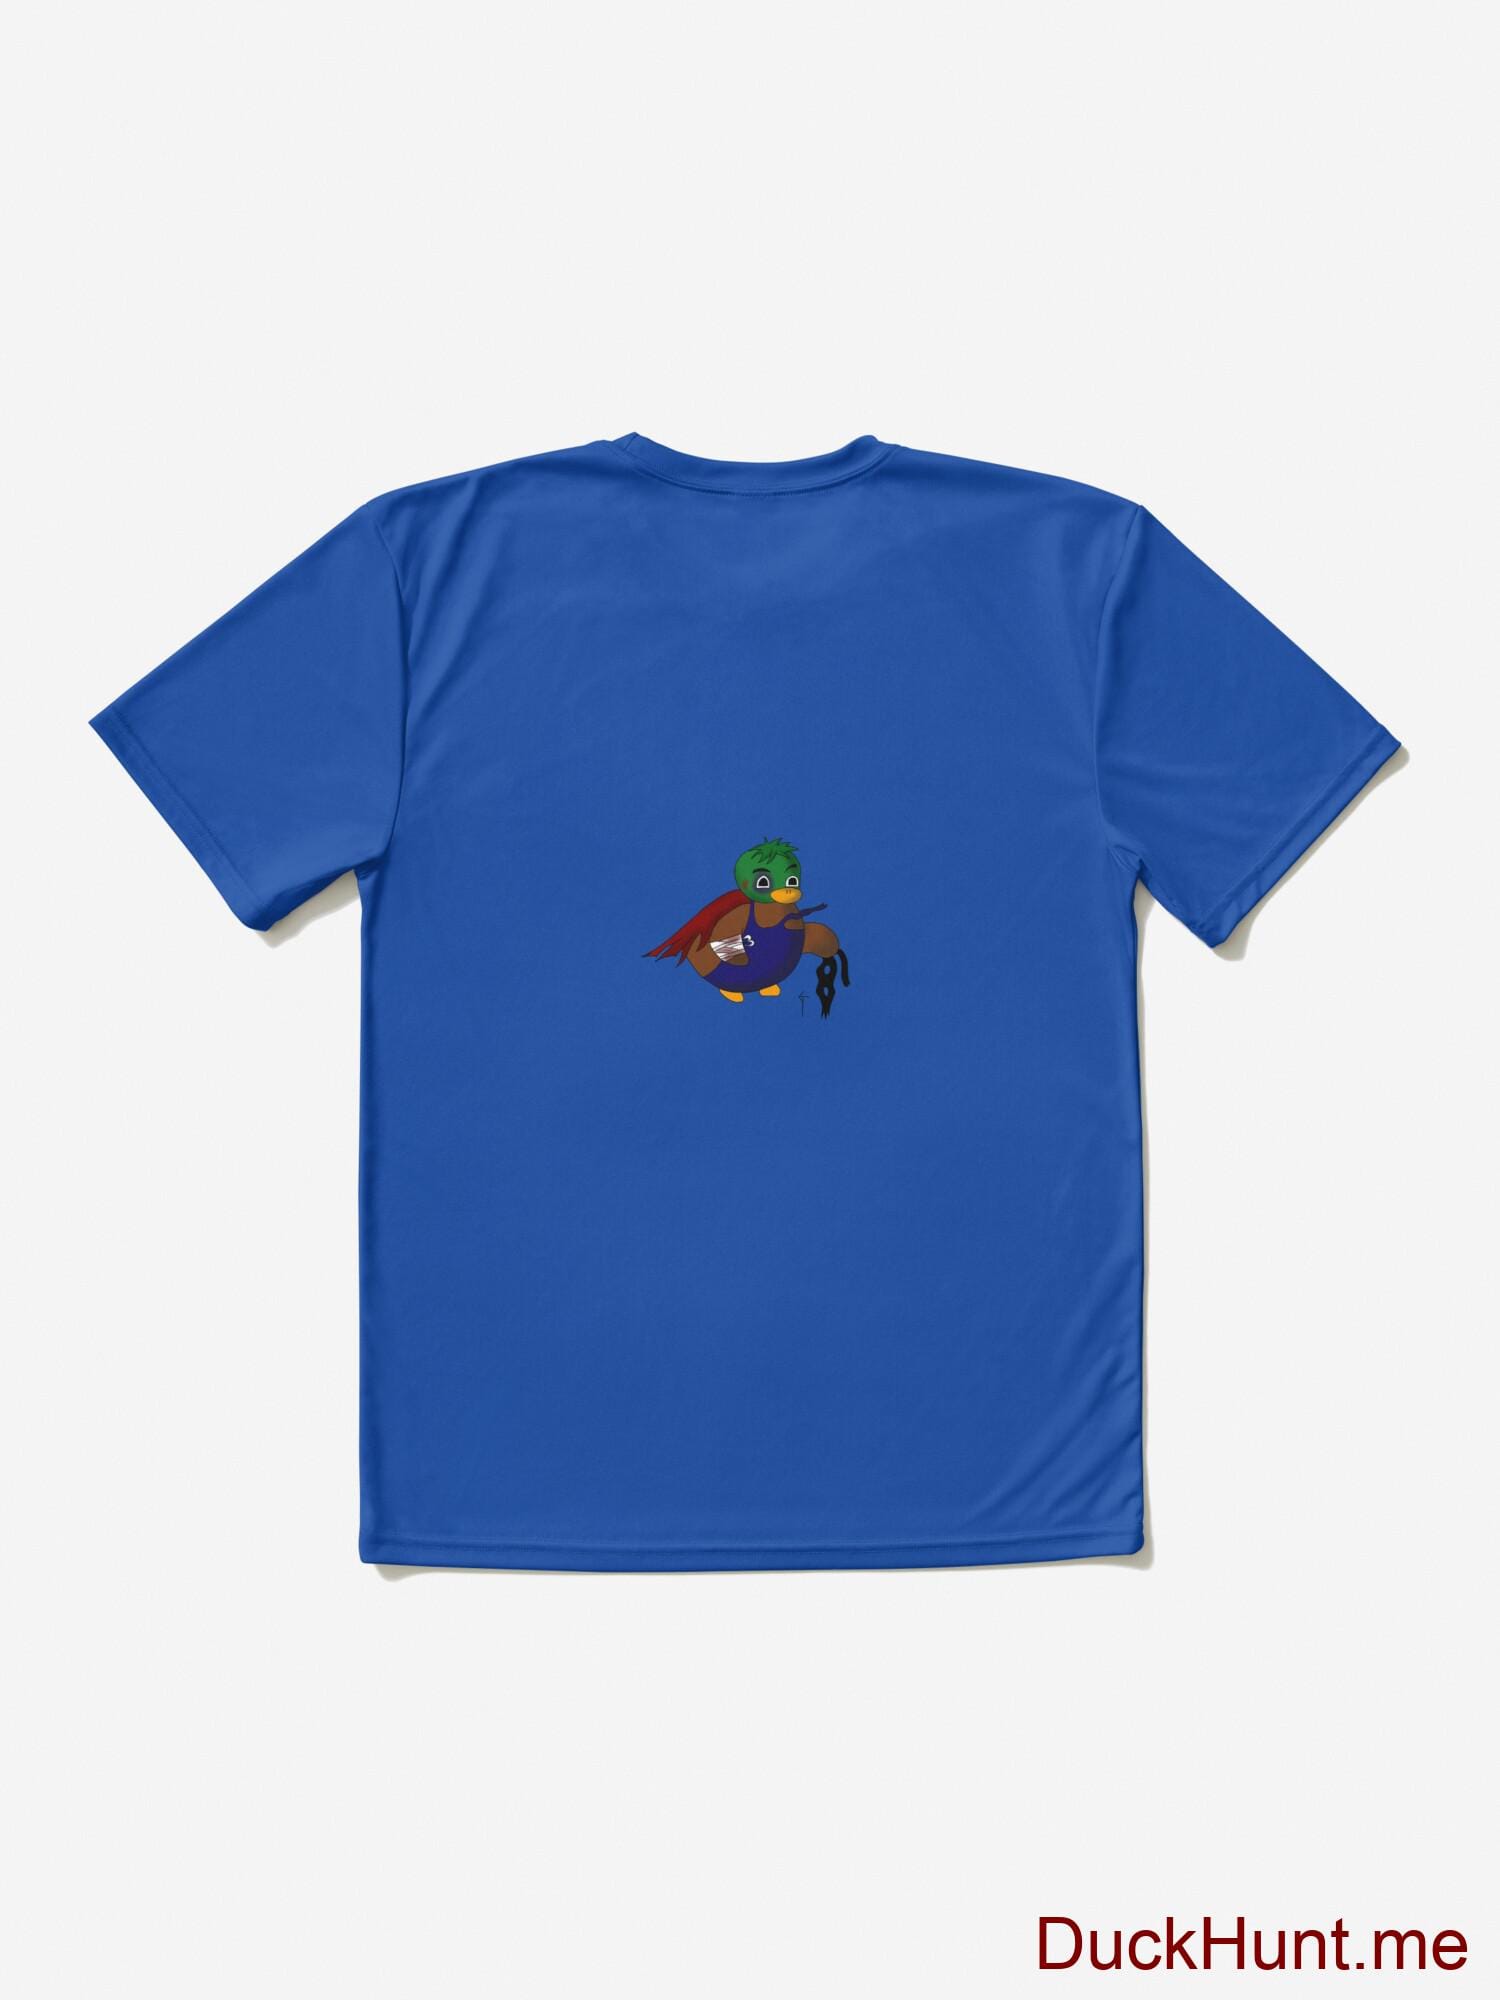 Dead DuckHunt Boss (smokeless) Royal Blue Active T-Shirt (Back printed) alternative image 1